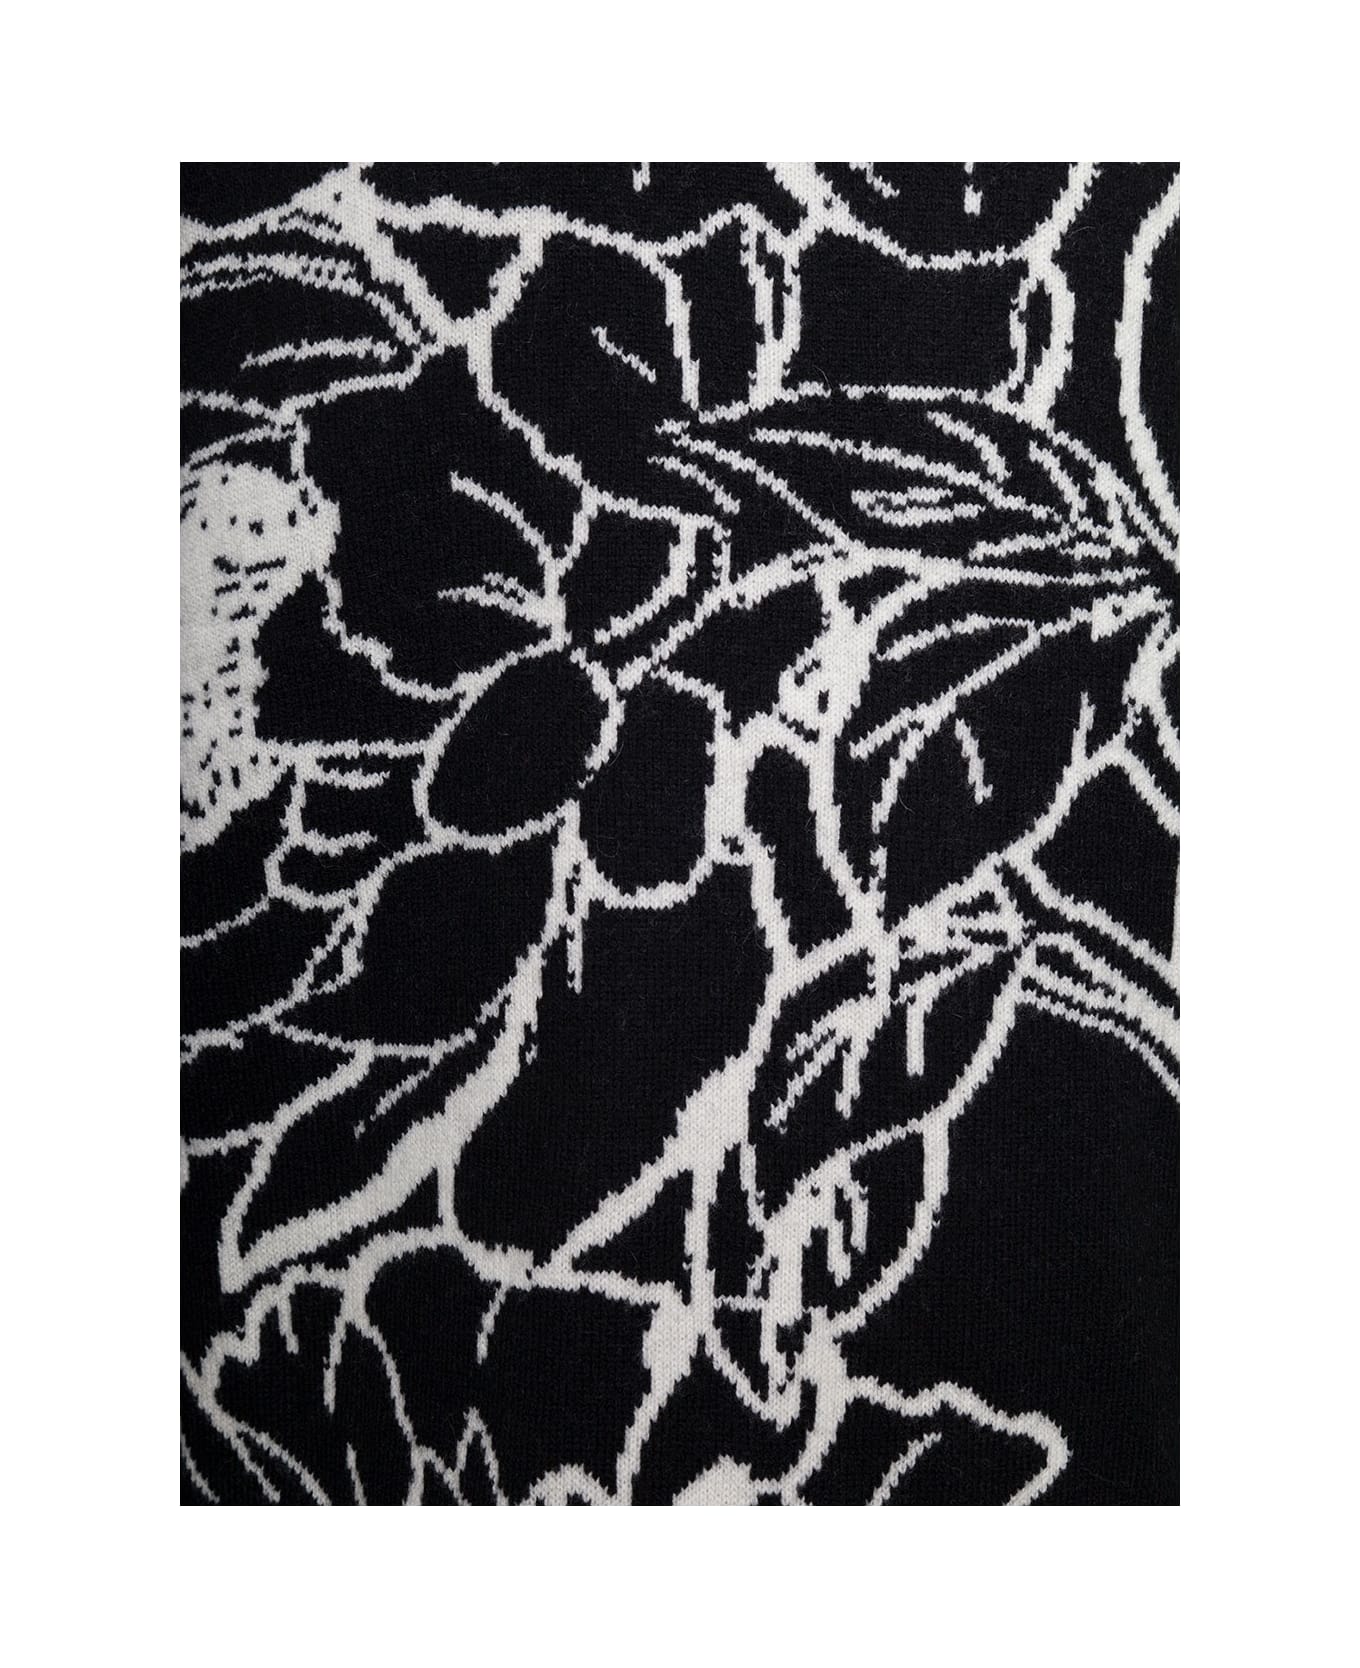 3.Paradis Knit Crewneck Sweater Flowers - Black ニットウェア